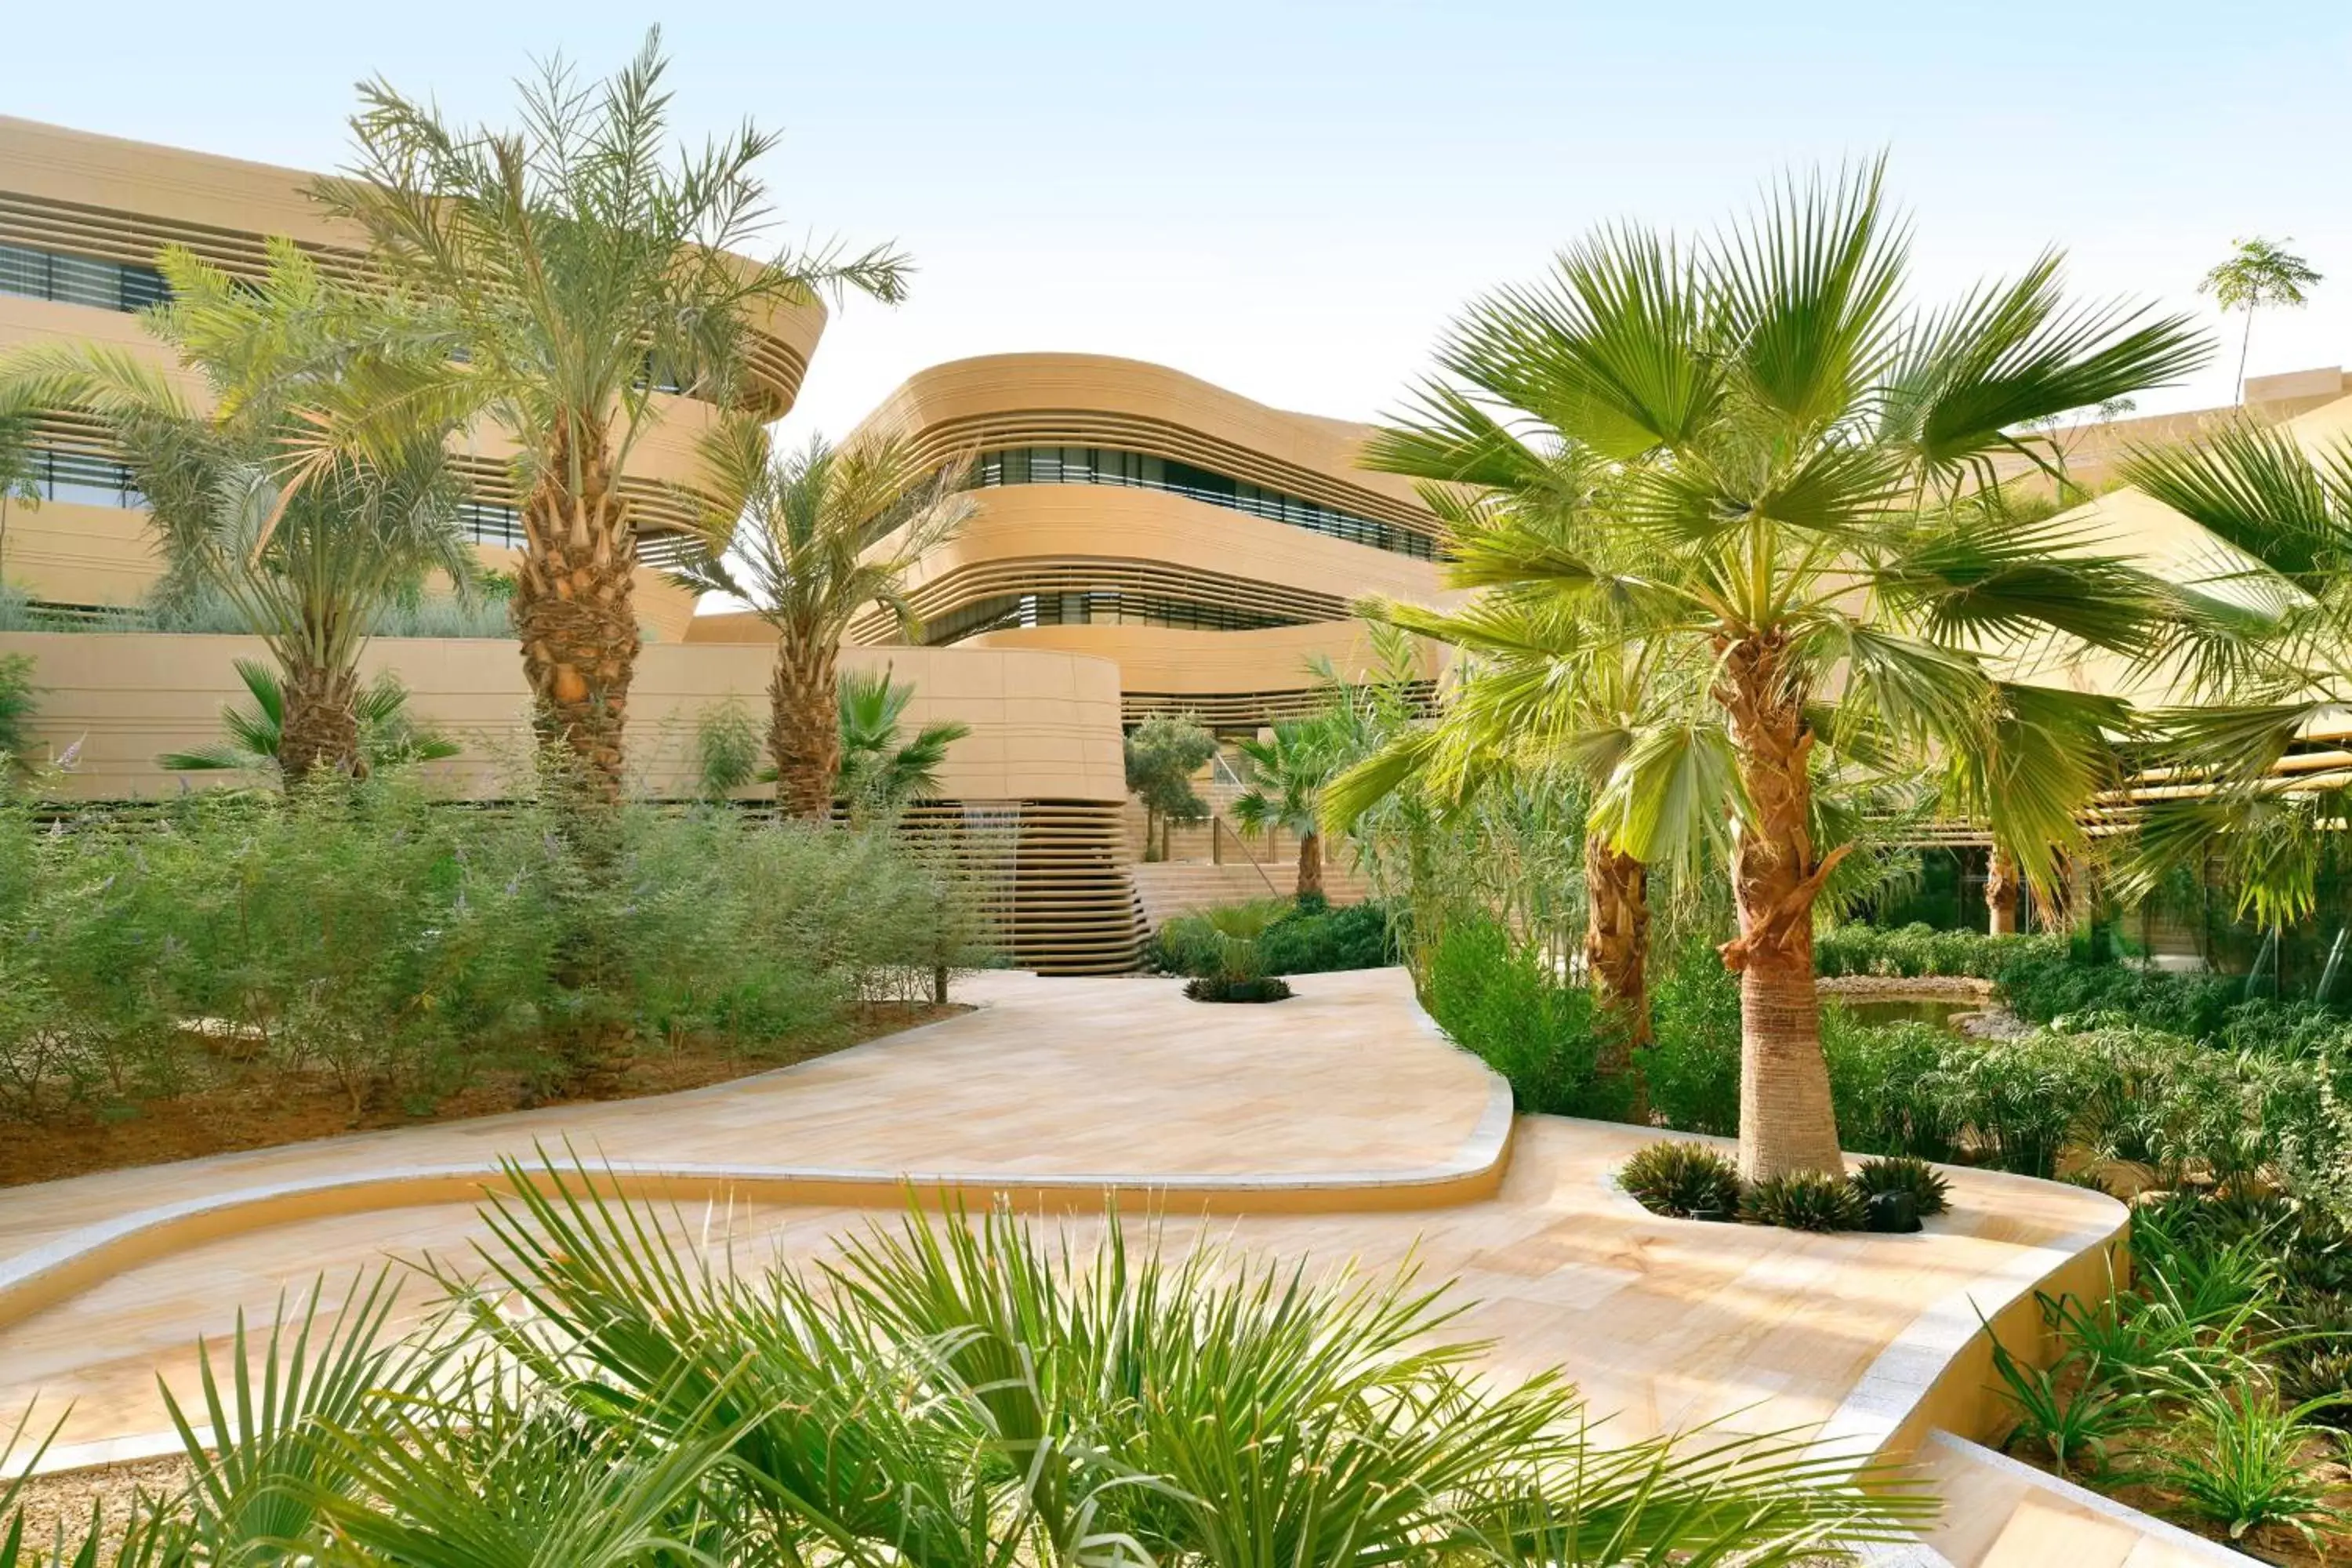 Property Building in Marriott Riyadh Diplomatic Quarter